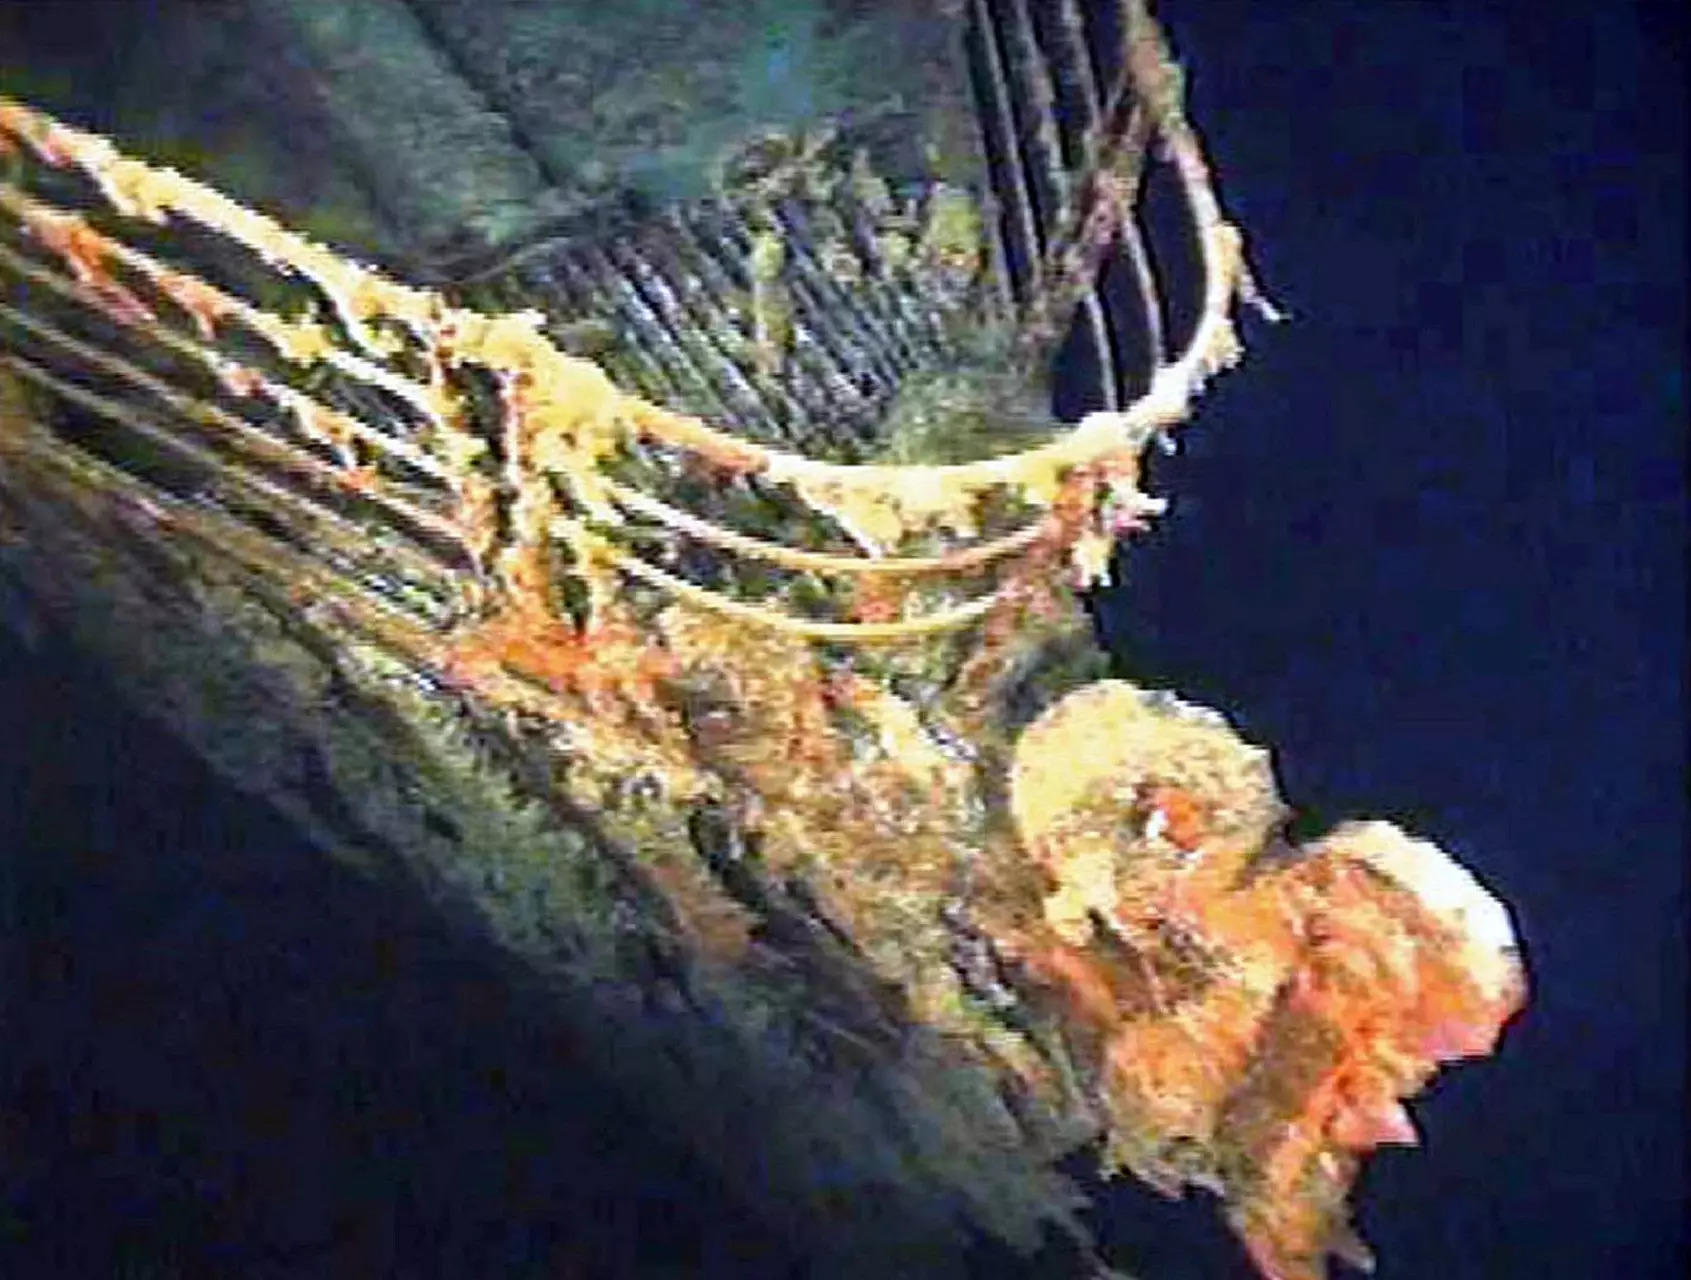 Submarine exploring Titanic wreck missing search underway